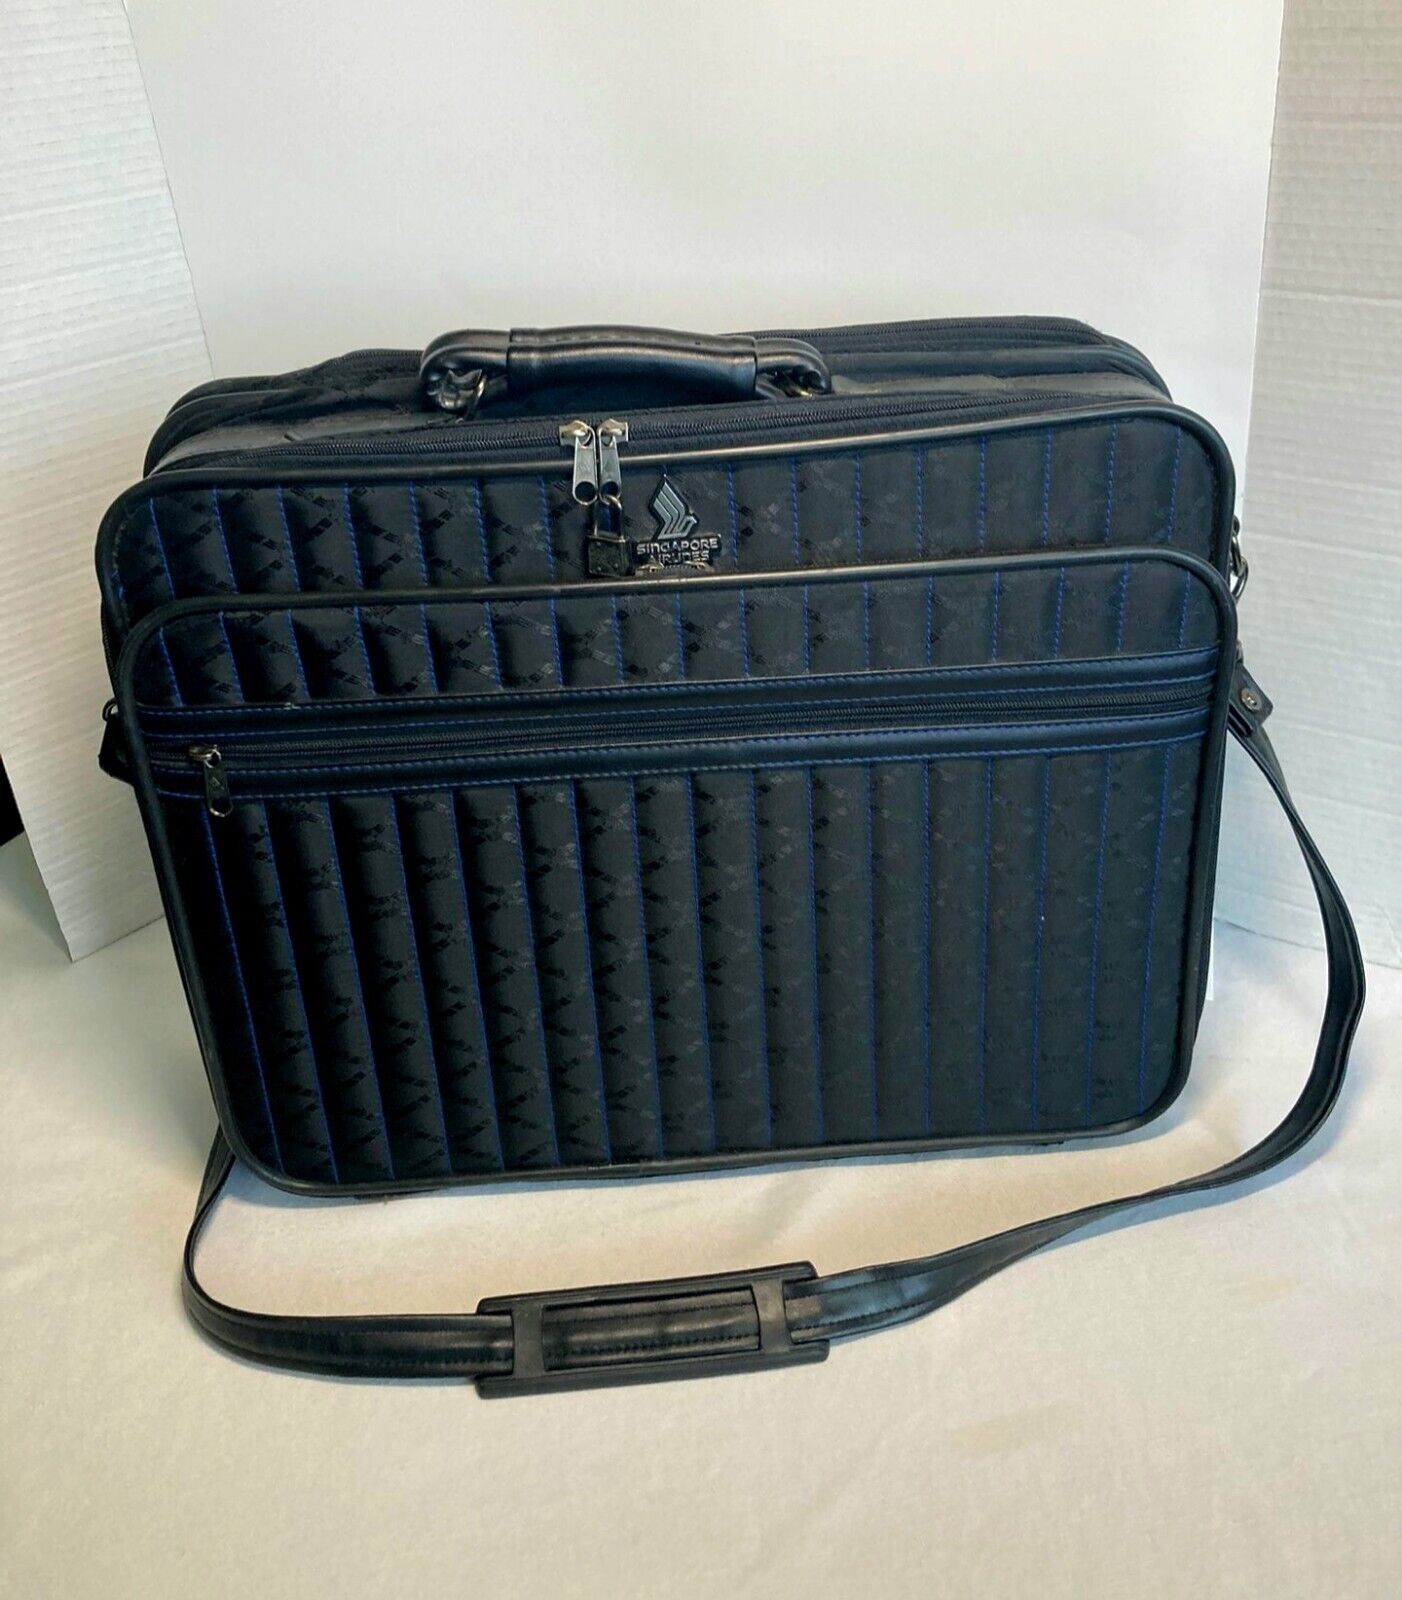 Singapore Airlines Bag Luggage Pilot Briefcase Case Travel Messenger Bag 